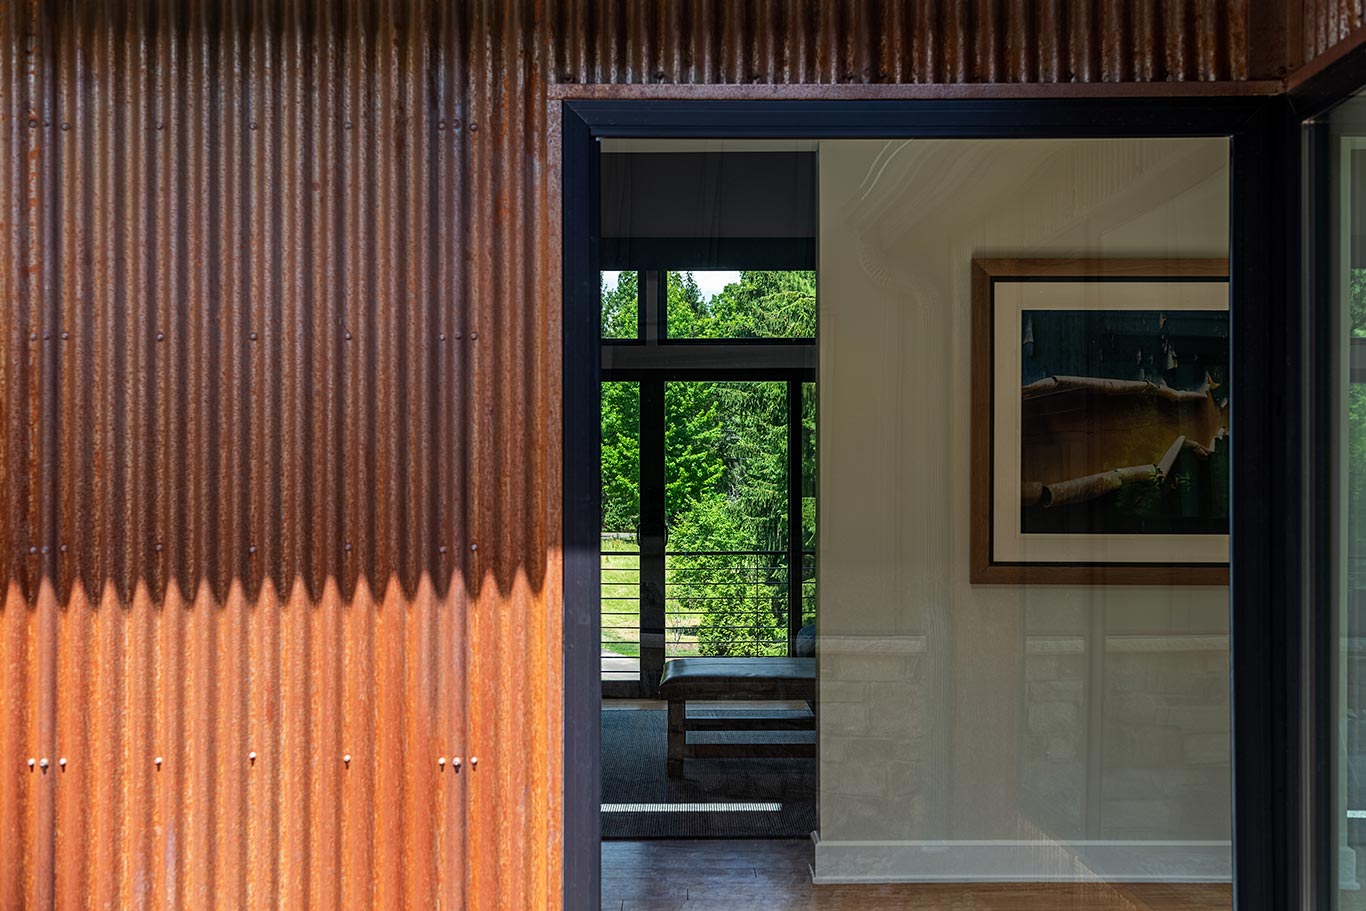 Corrugated metal siding abuts full-height window unit